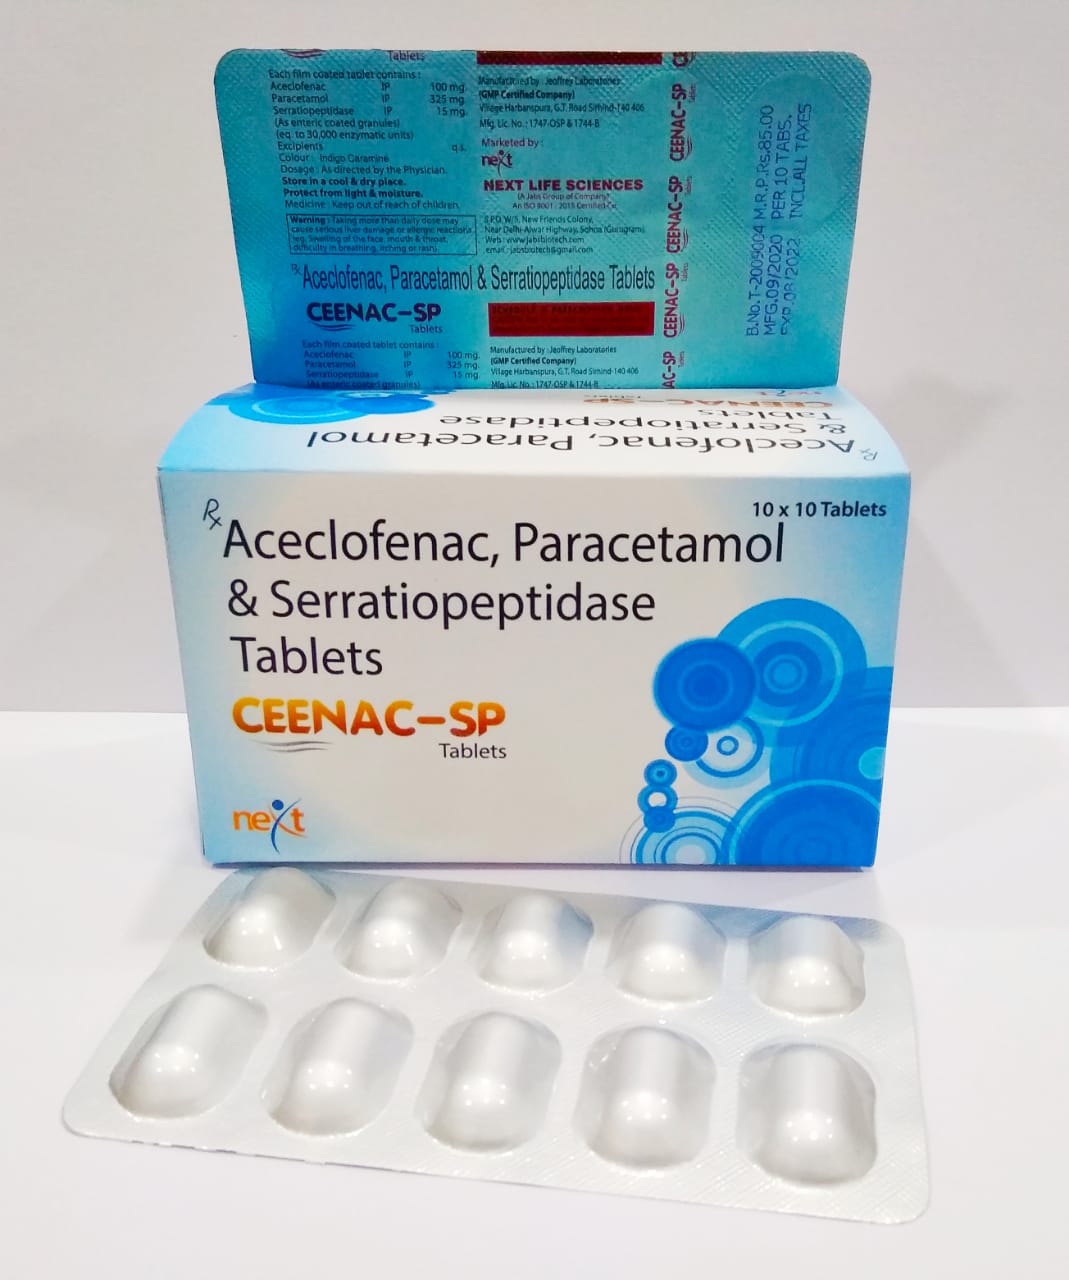 CEENAC-SP Tablets